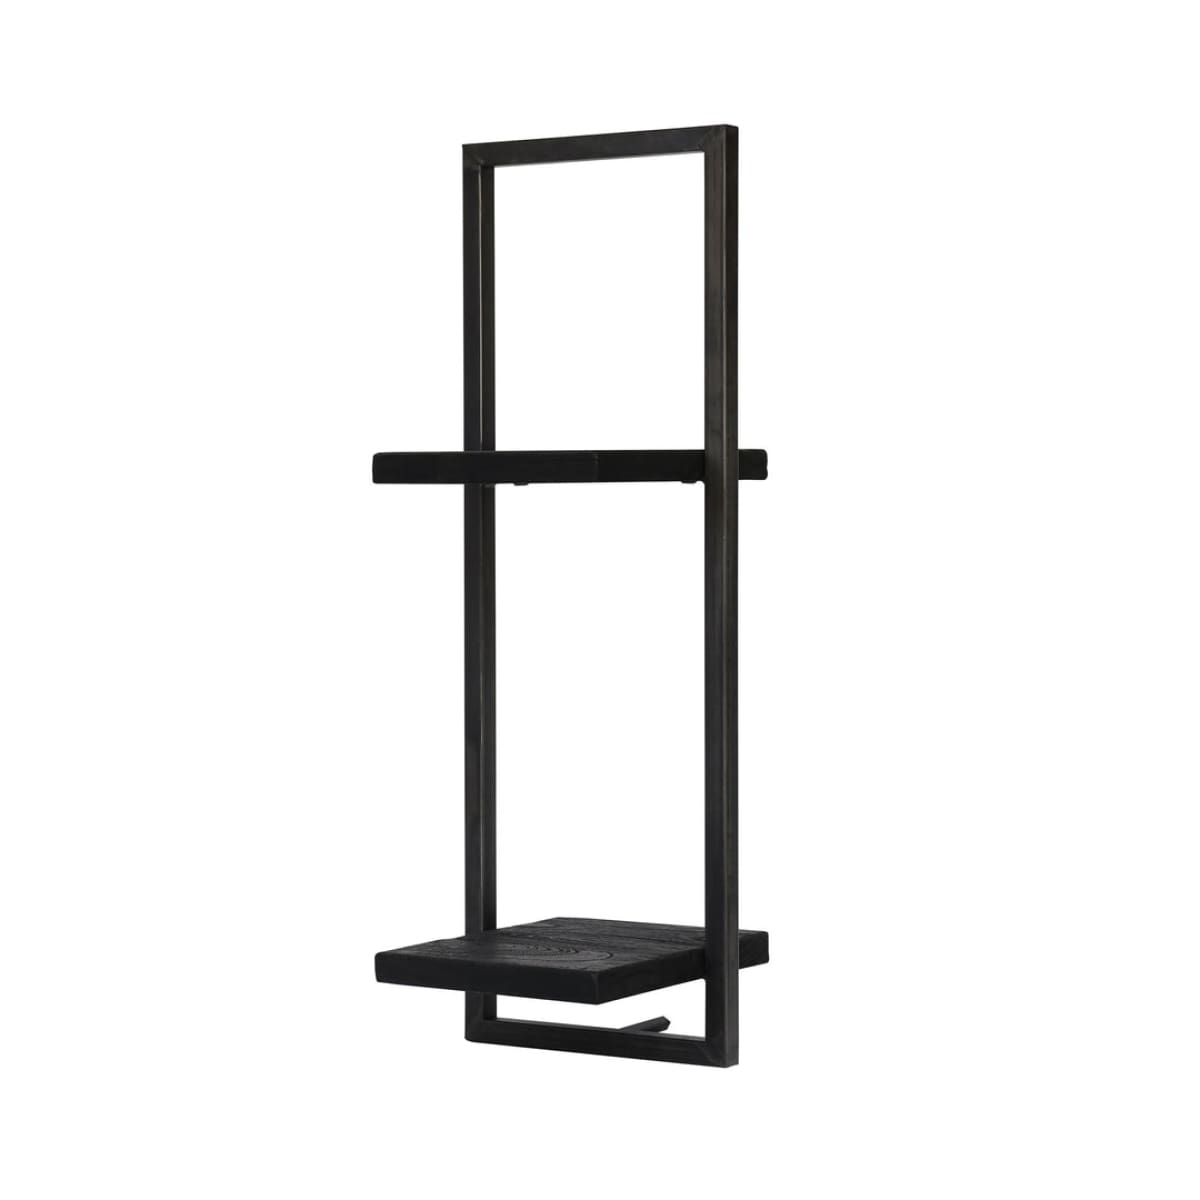 D-Bodhi Metal Frame Wall Box - Black Type D (1/Box) - lh-import-shelving-storage